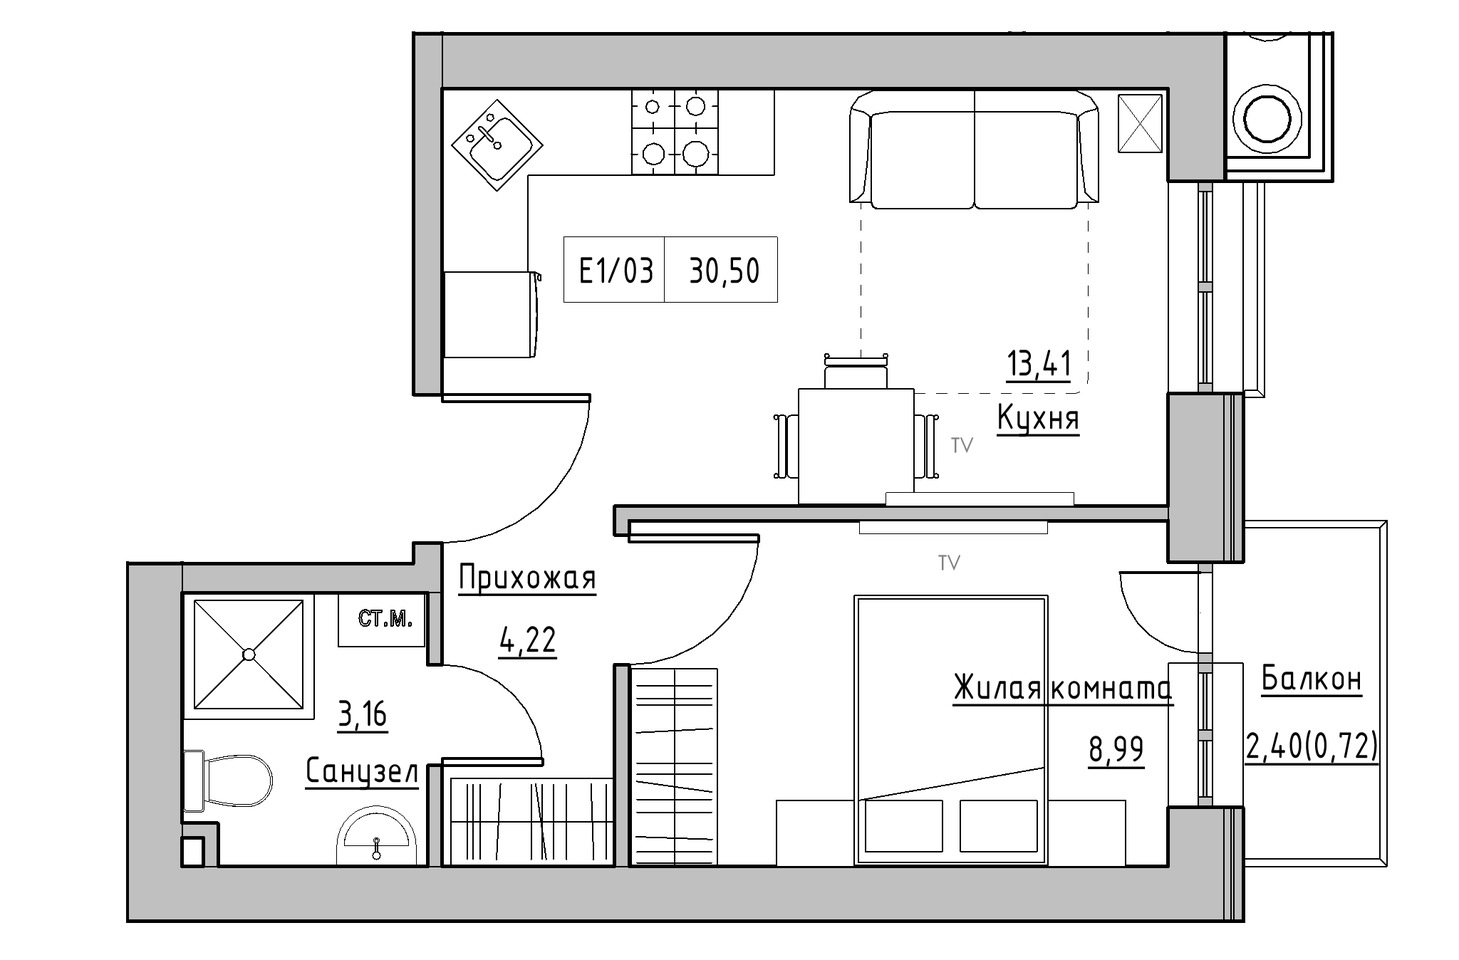 Planning 1-rm flats area 29.78m2, KS-005-05/0002.